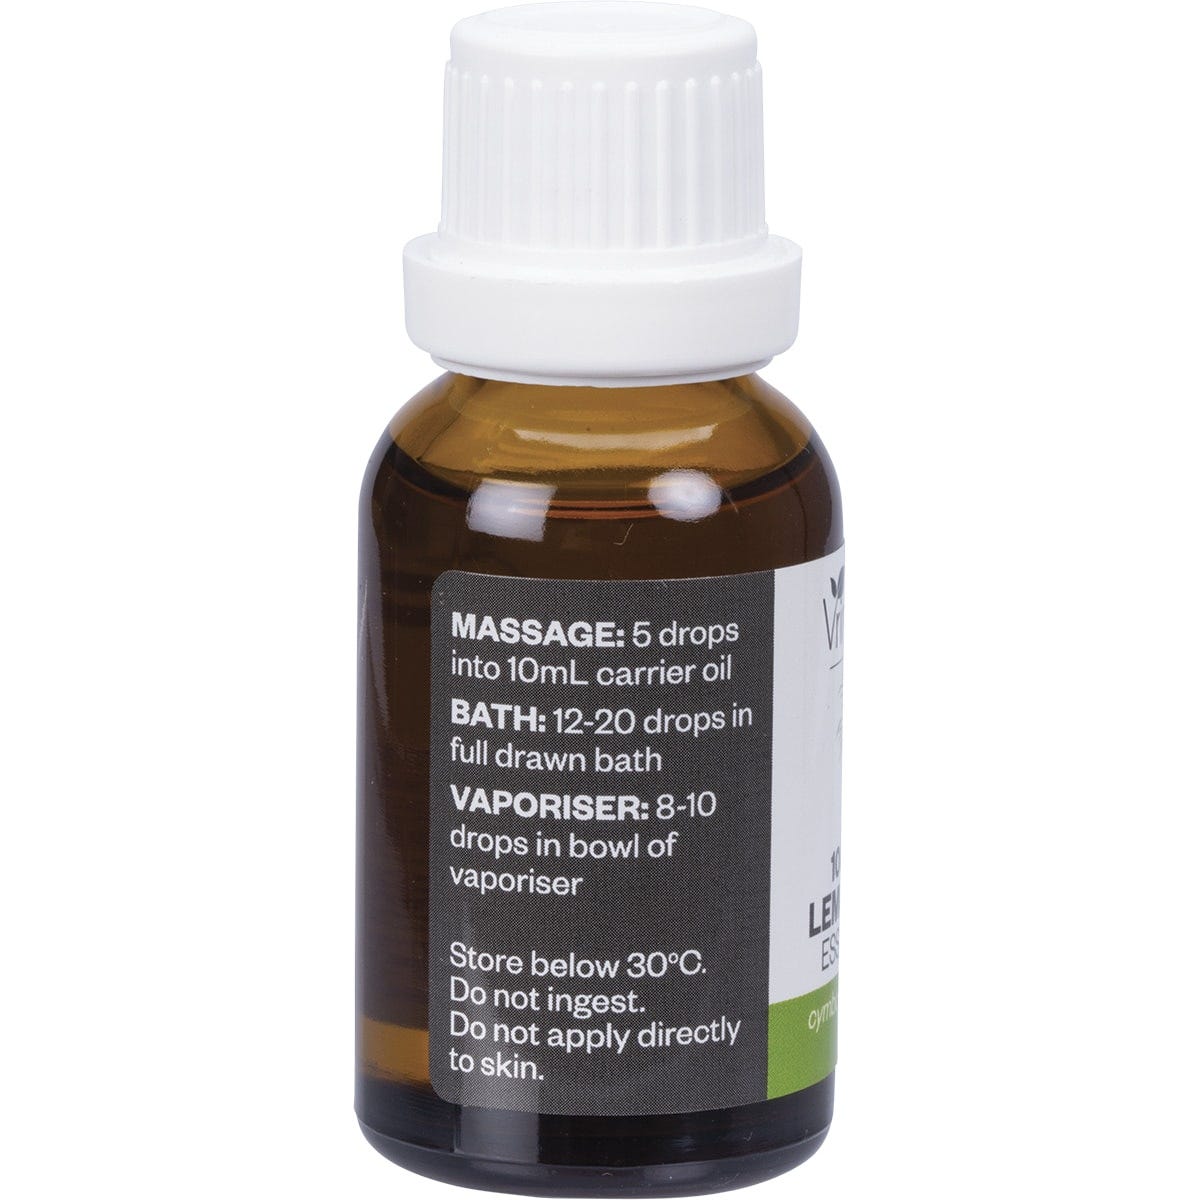 Vrindavan Essential Oil 100% Lemongrass 25ml - Dr Earth - Aromatherapy